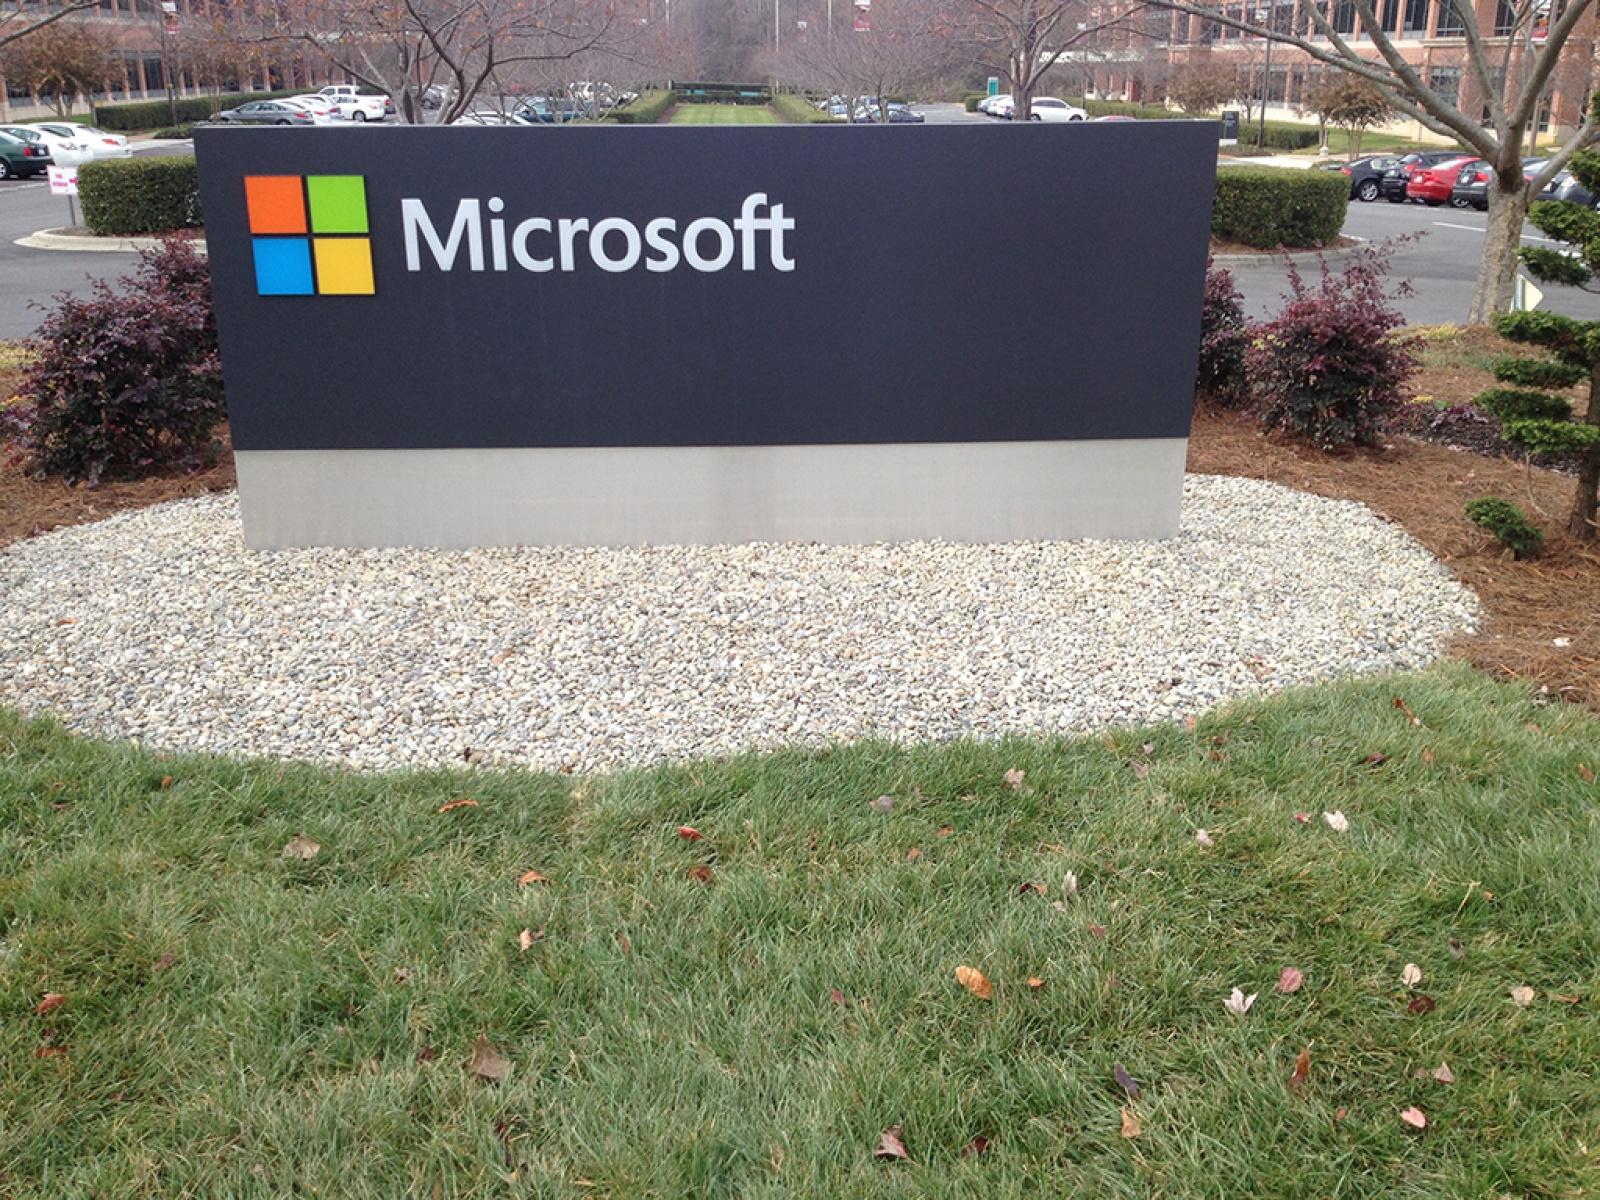 Microsoft corporate signage